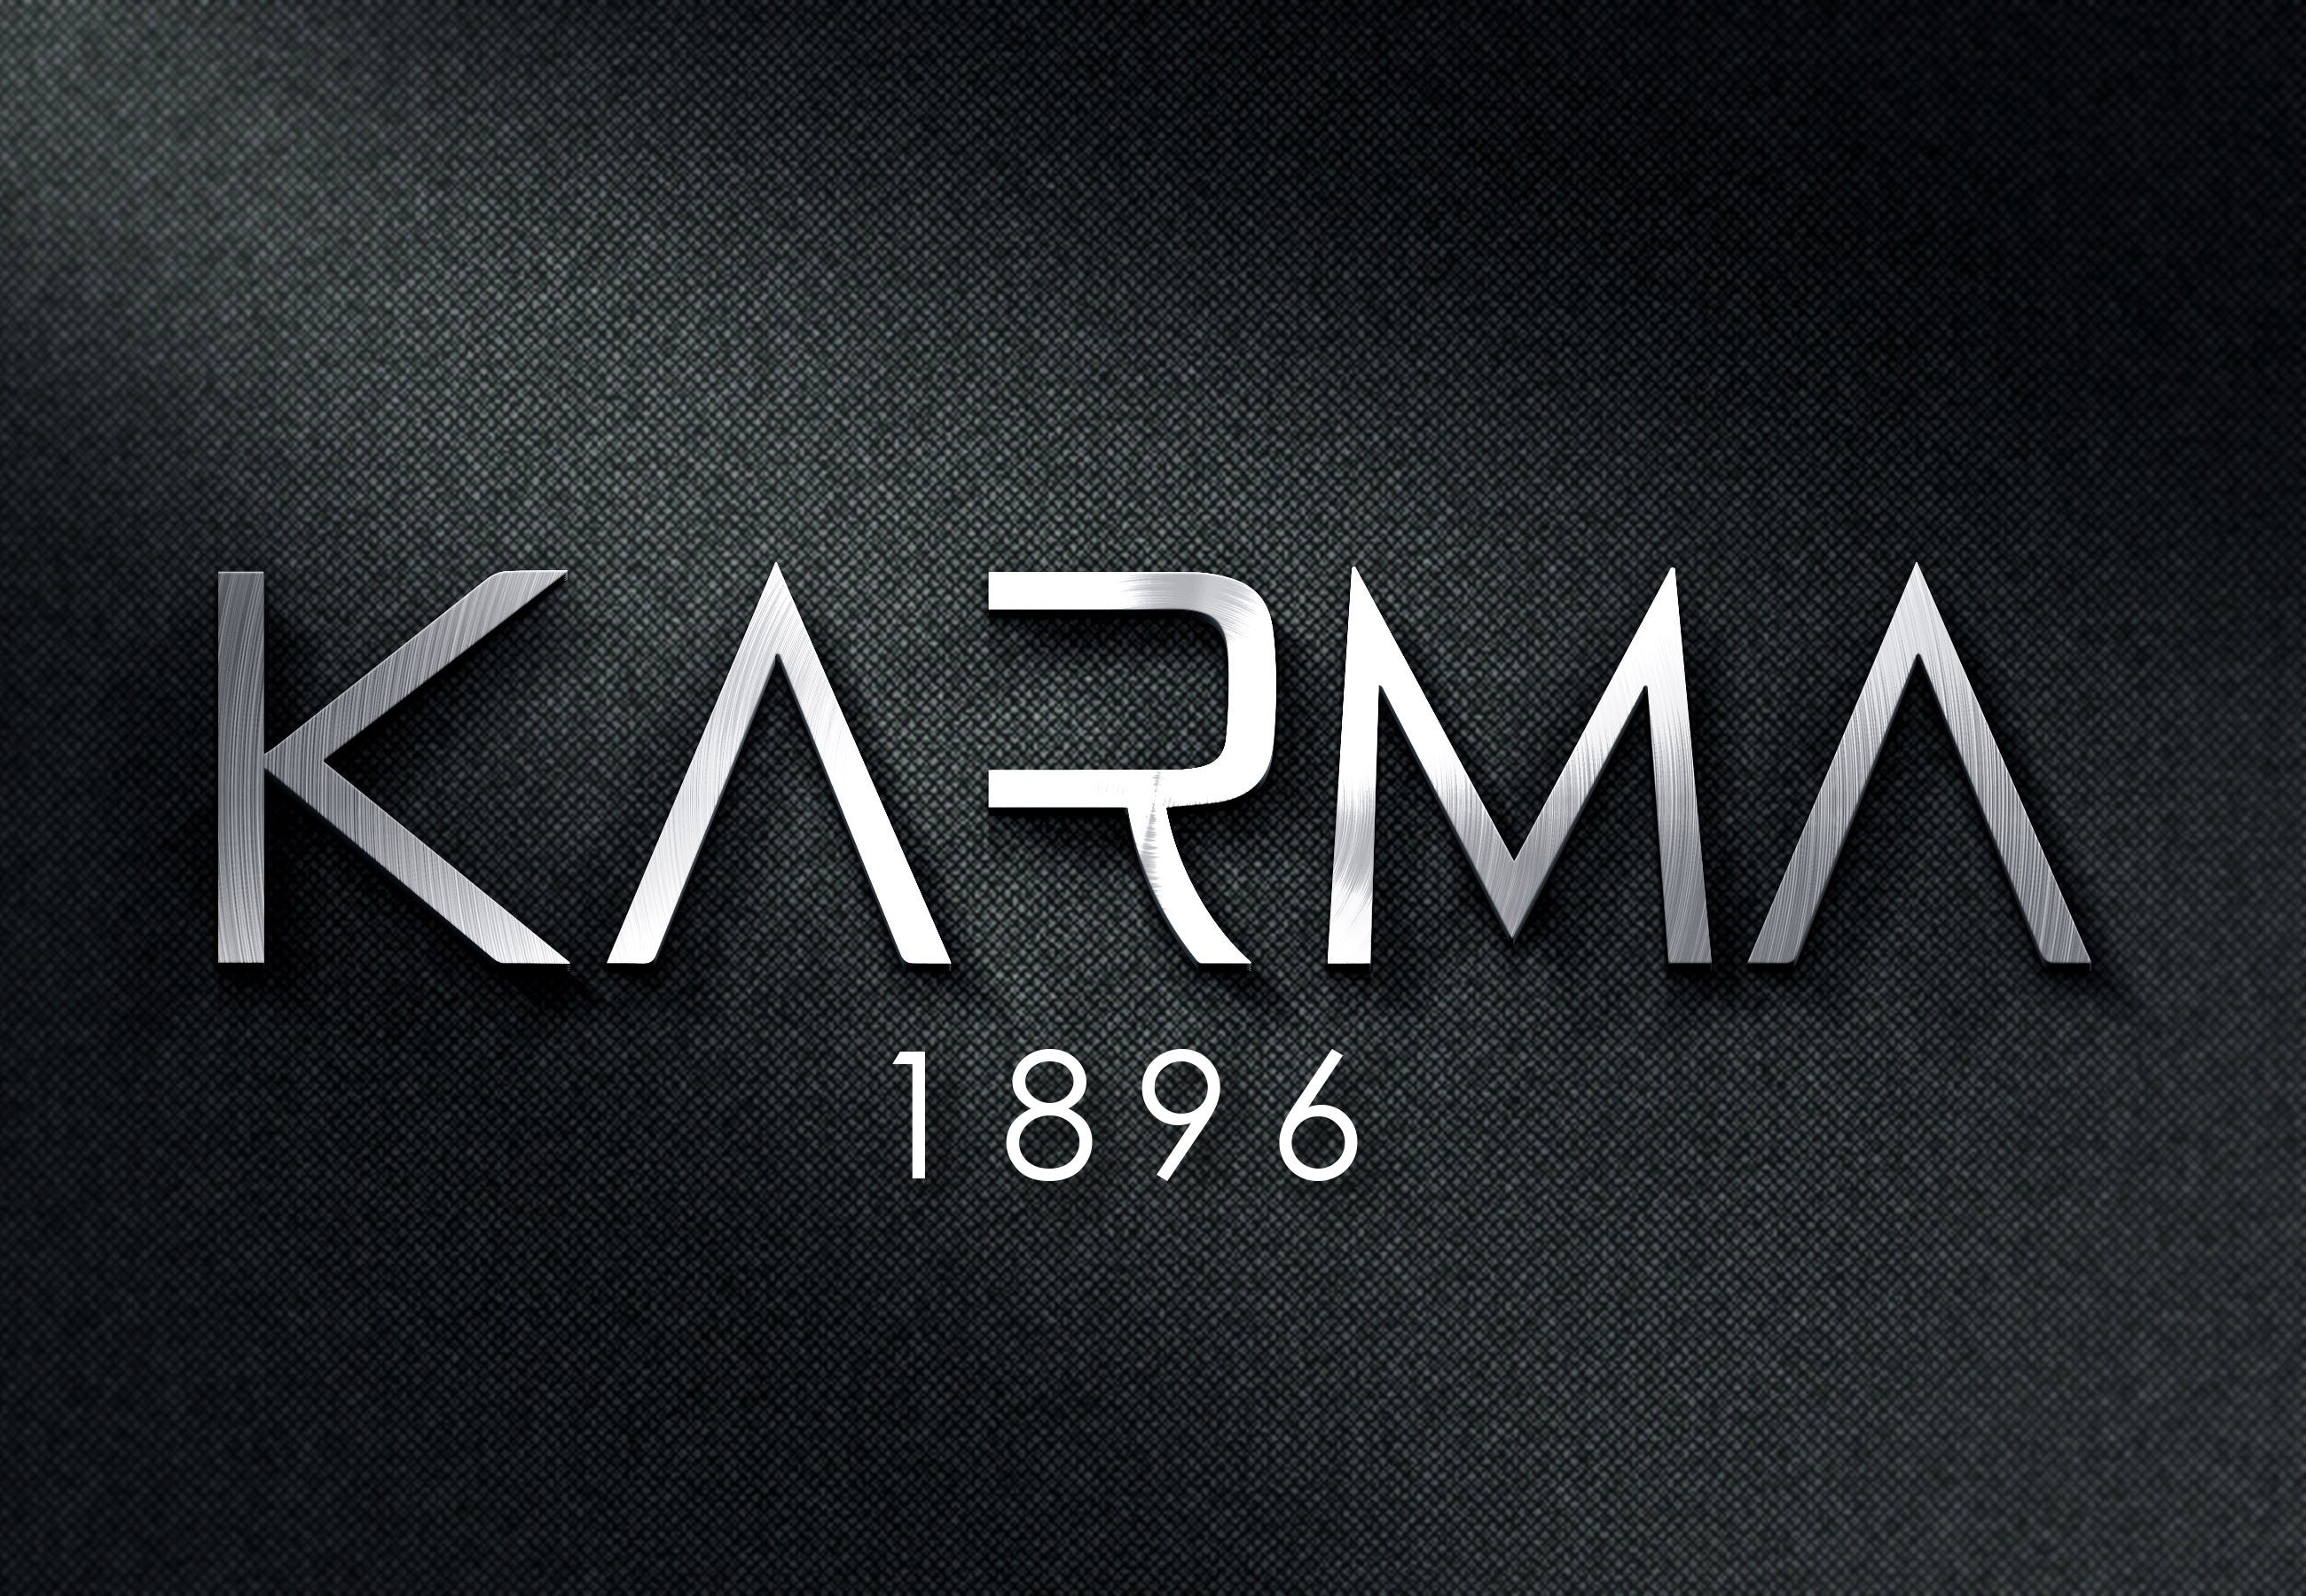 Credit Karma logo – FLYY Credit